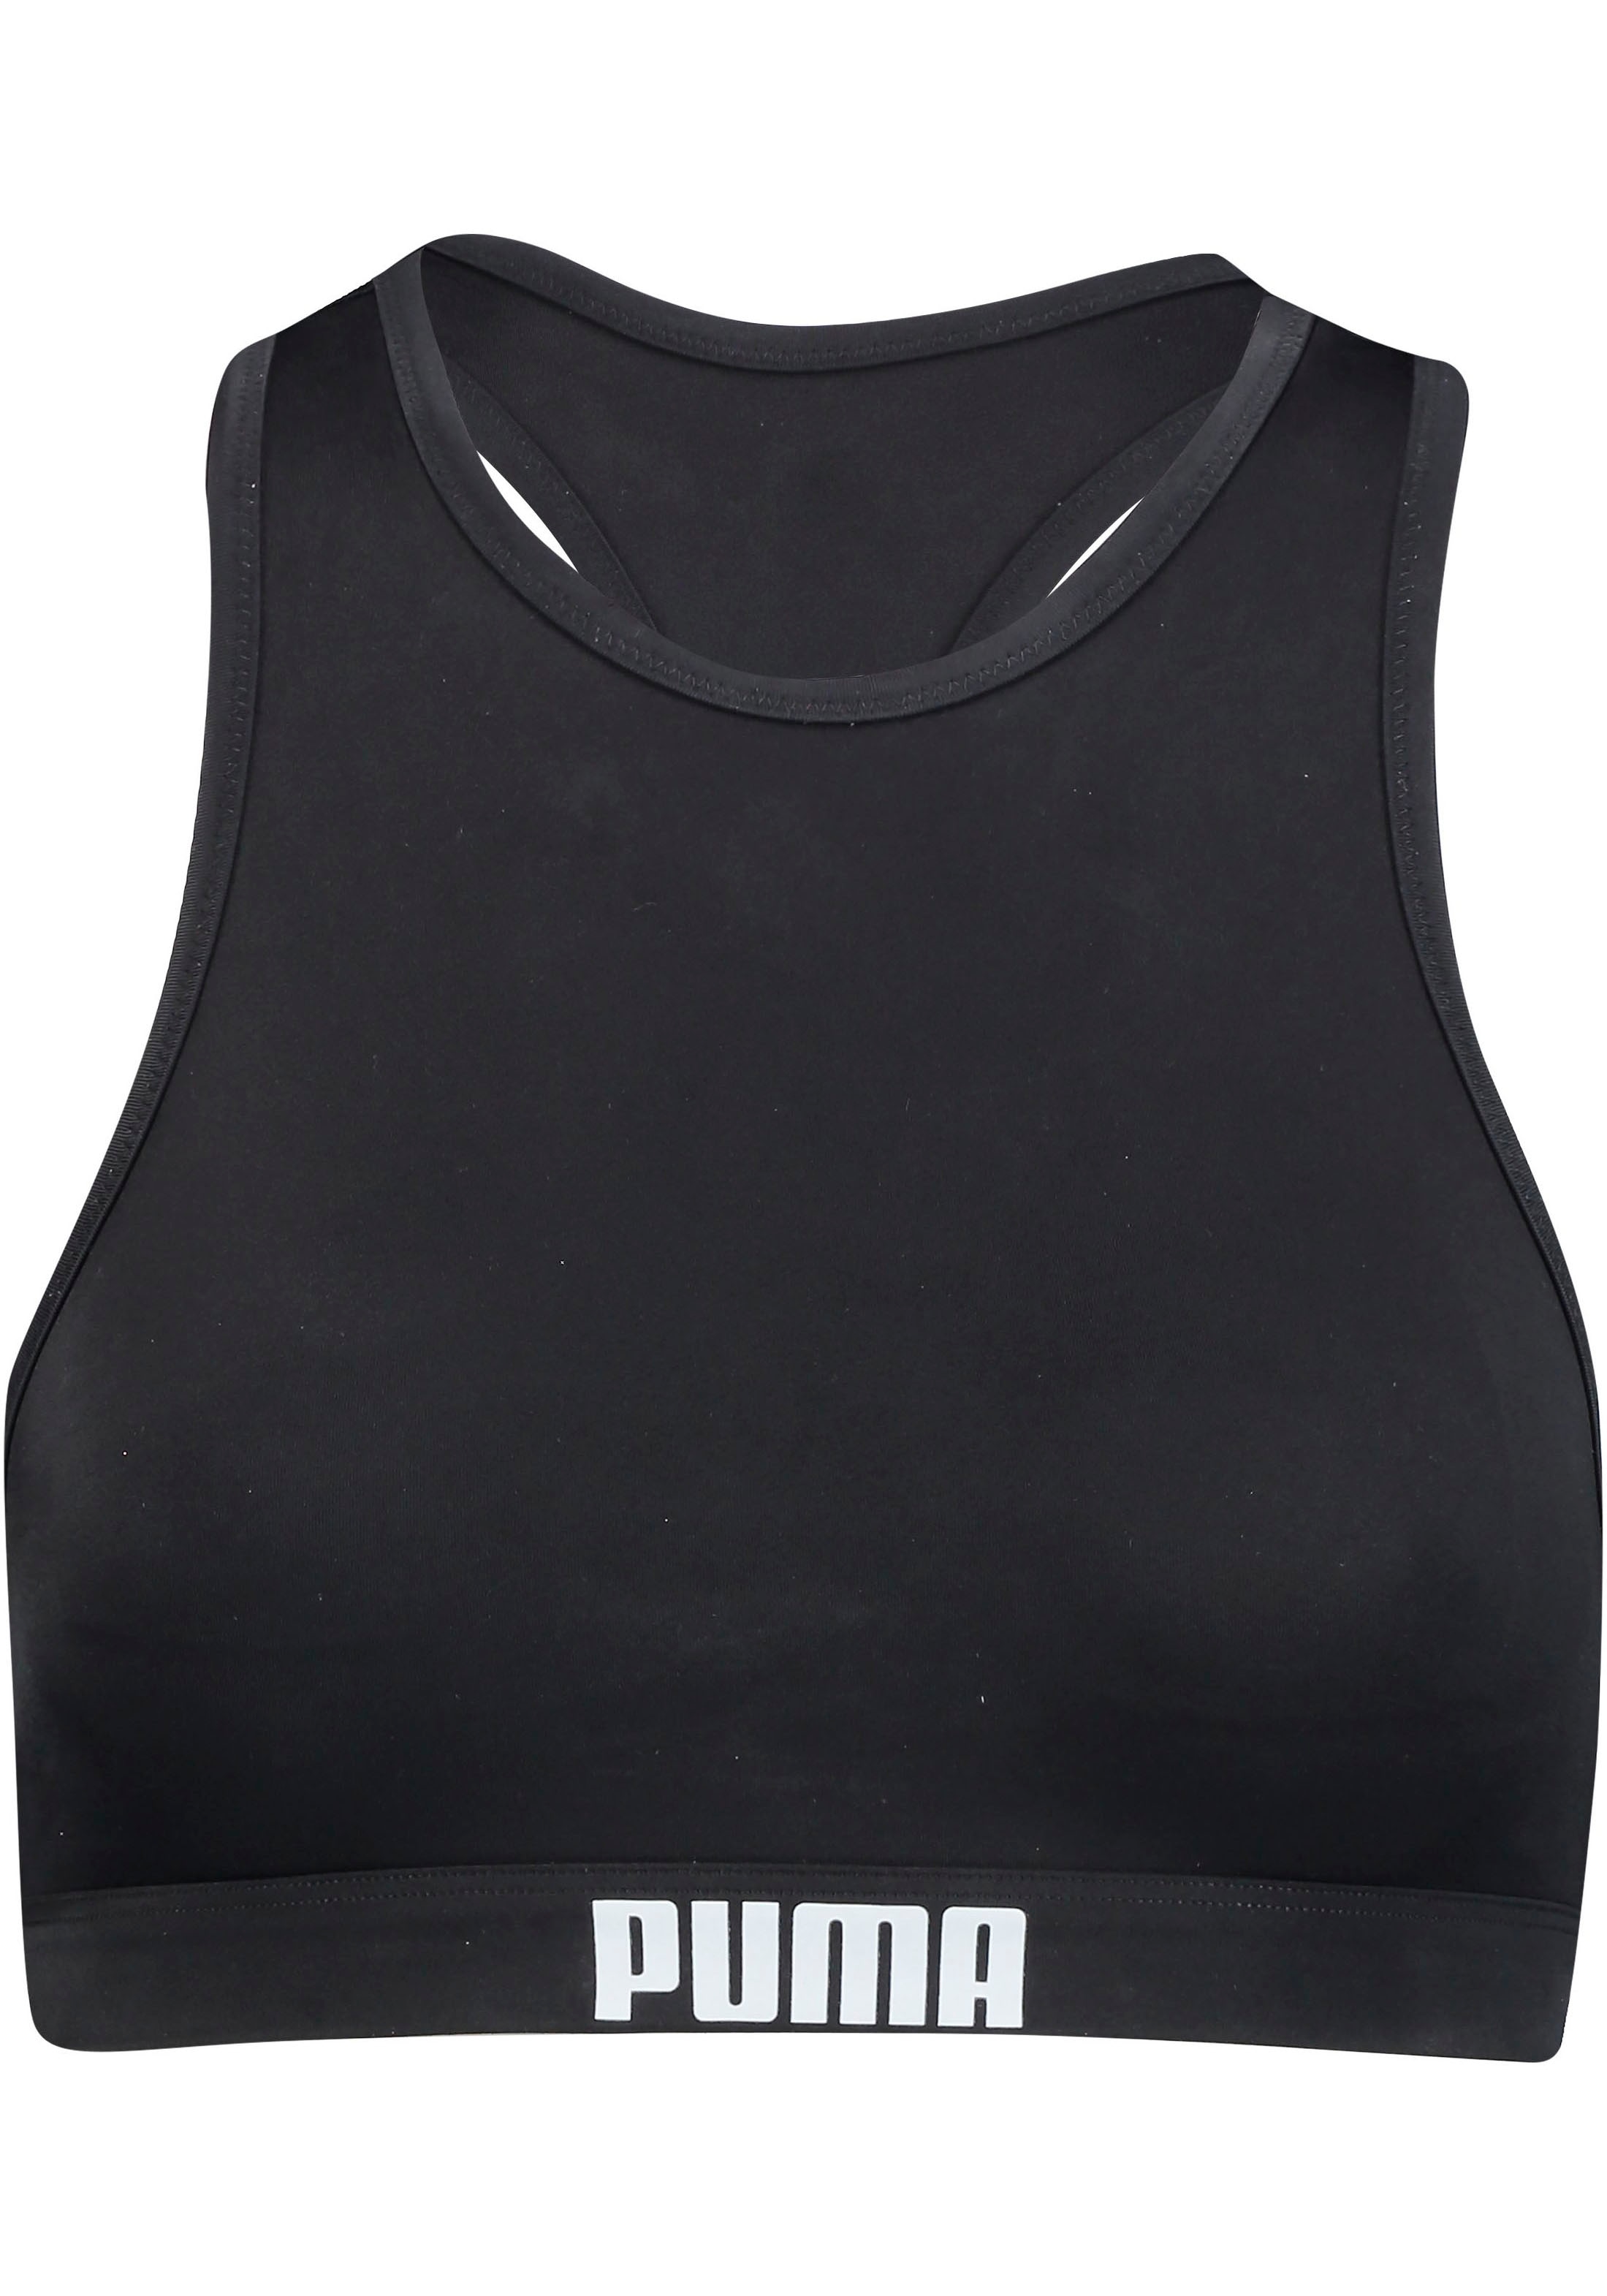 PUMA Bustier-Bikini-Top, mit Racerback-Rücken